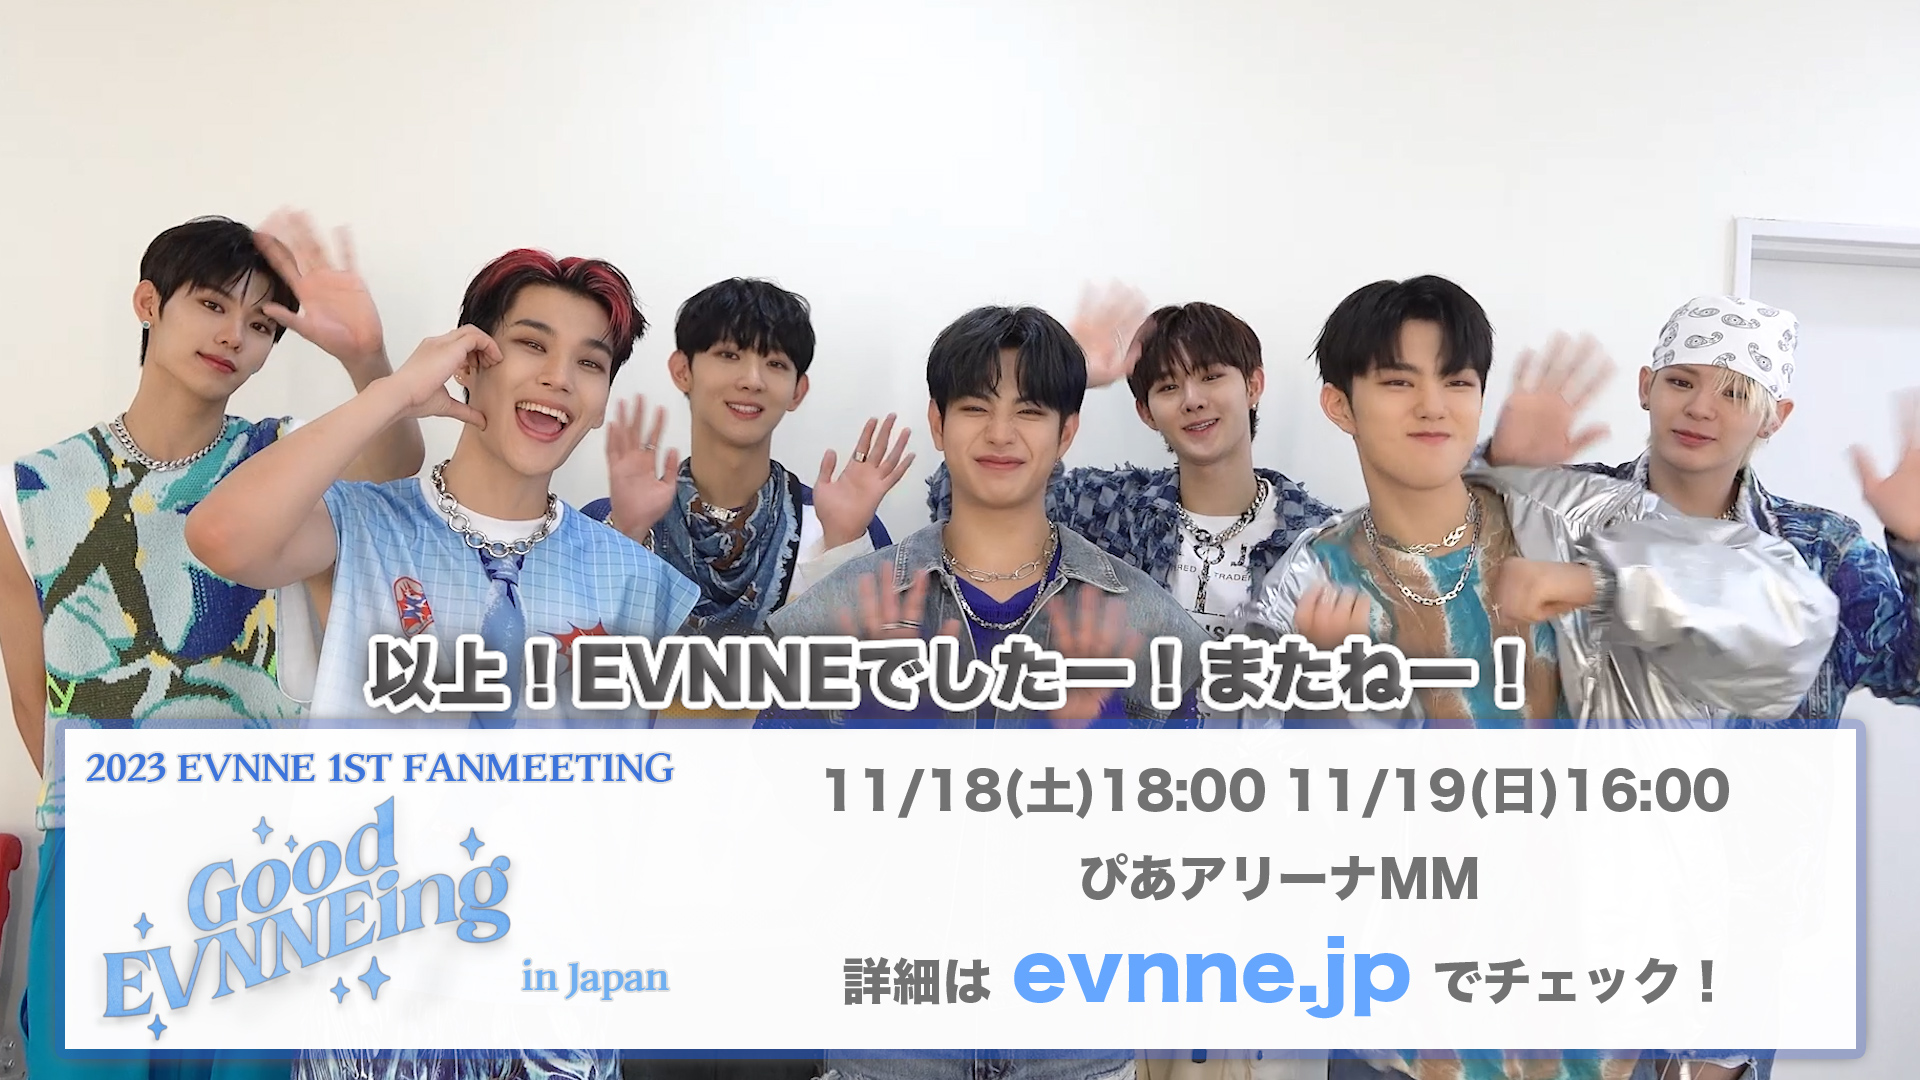 【MOVIE】2023 EVNNE 1st Fanmeeting [Good EVNNEing] in Japan メッセージ映像が到着！